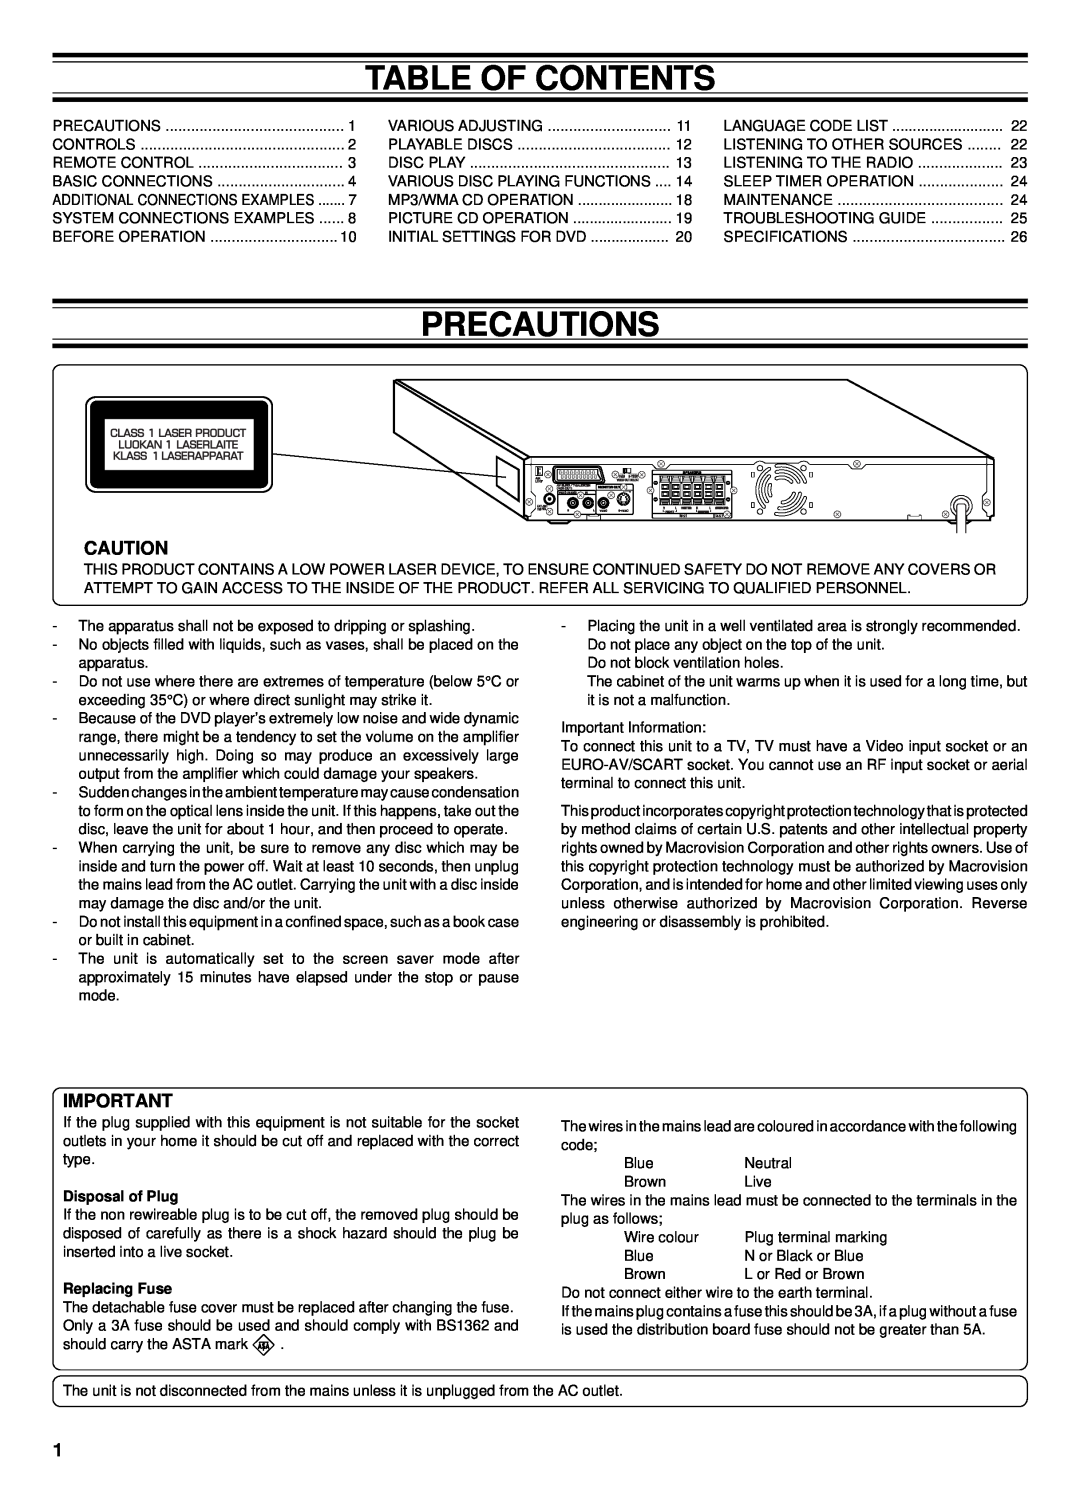 Sanyo DC-TS760 instruction manual Table Of Contents, Precautions, Disposal of Plug, Replacing Fuse 